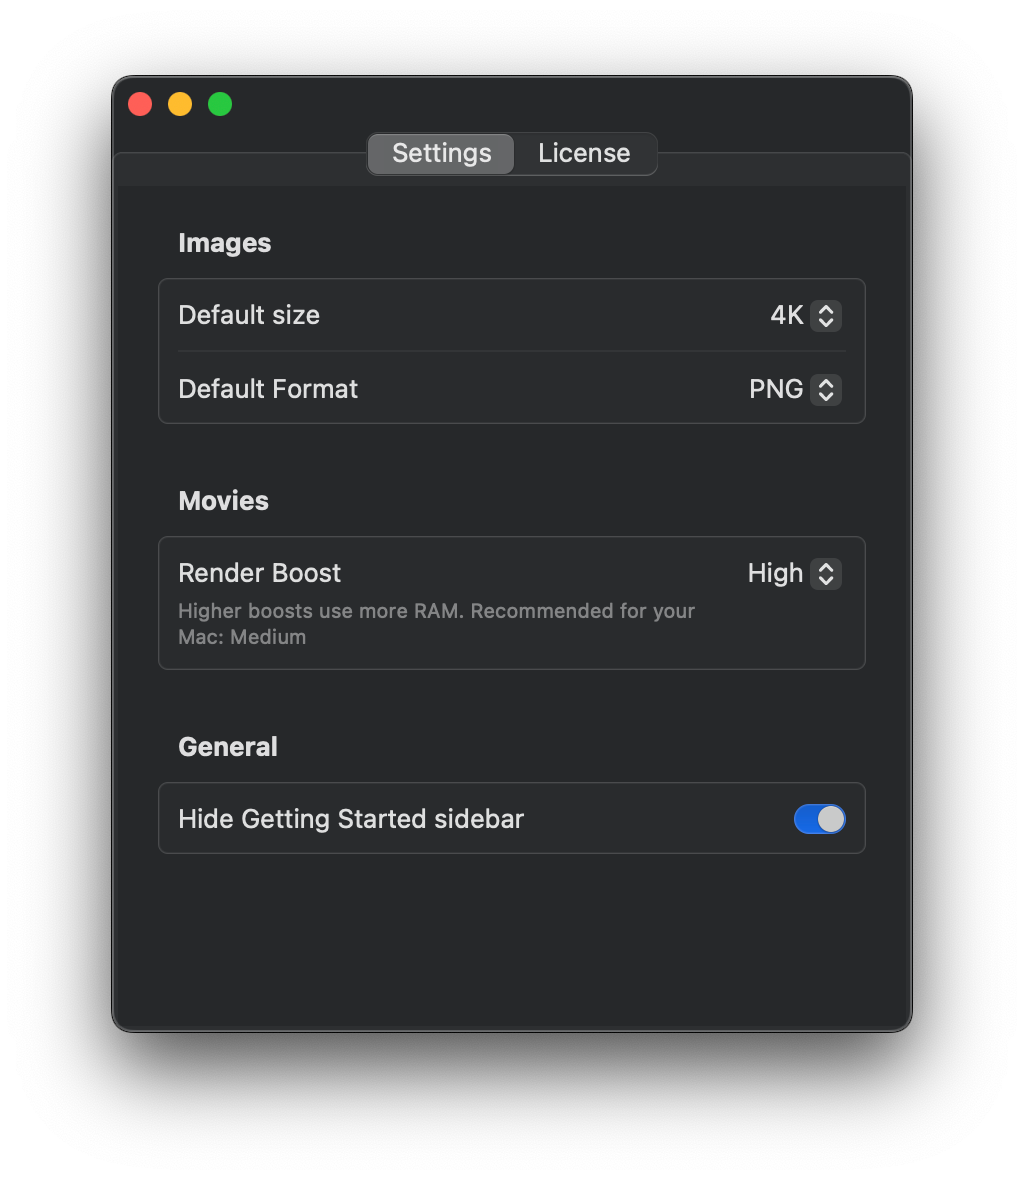 Rotato settings showing the memory settings